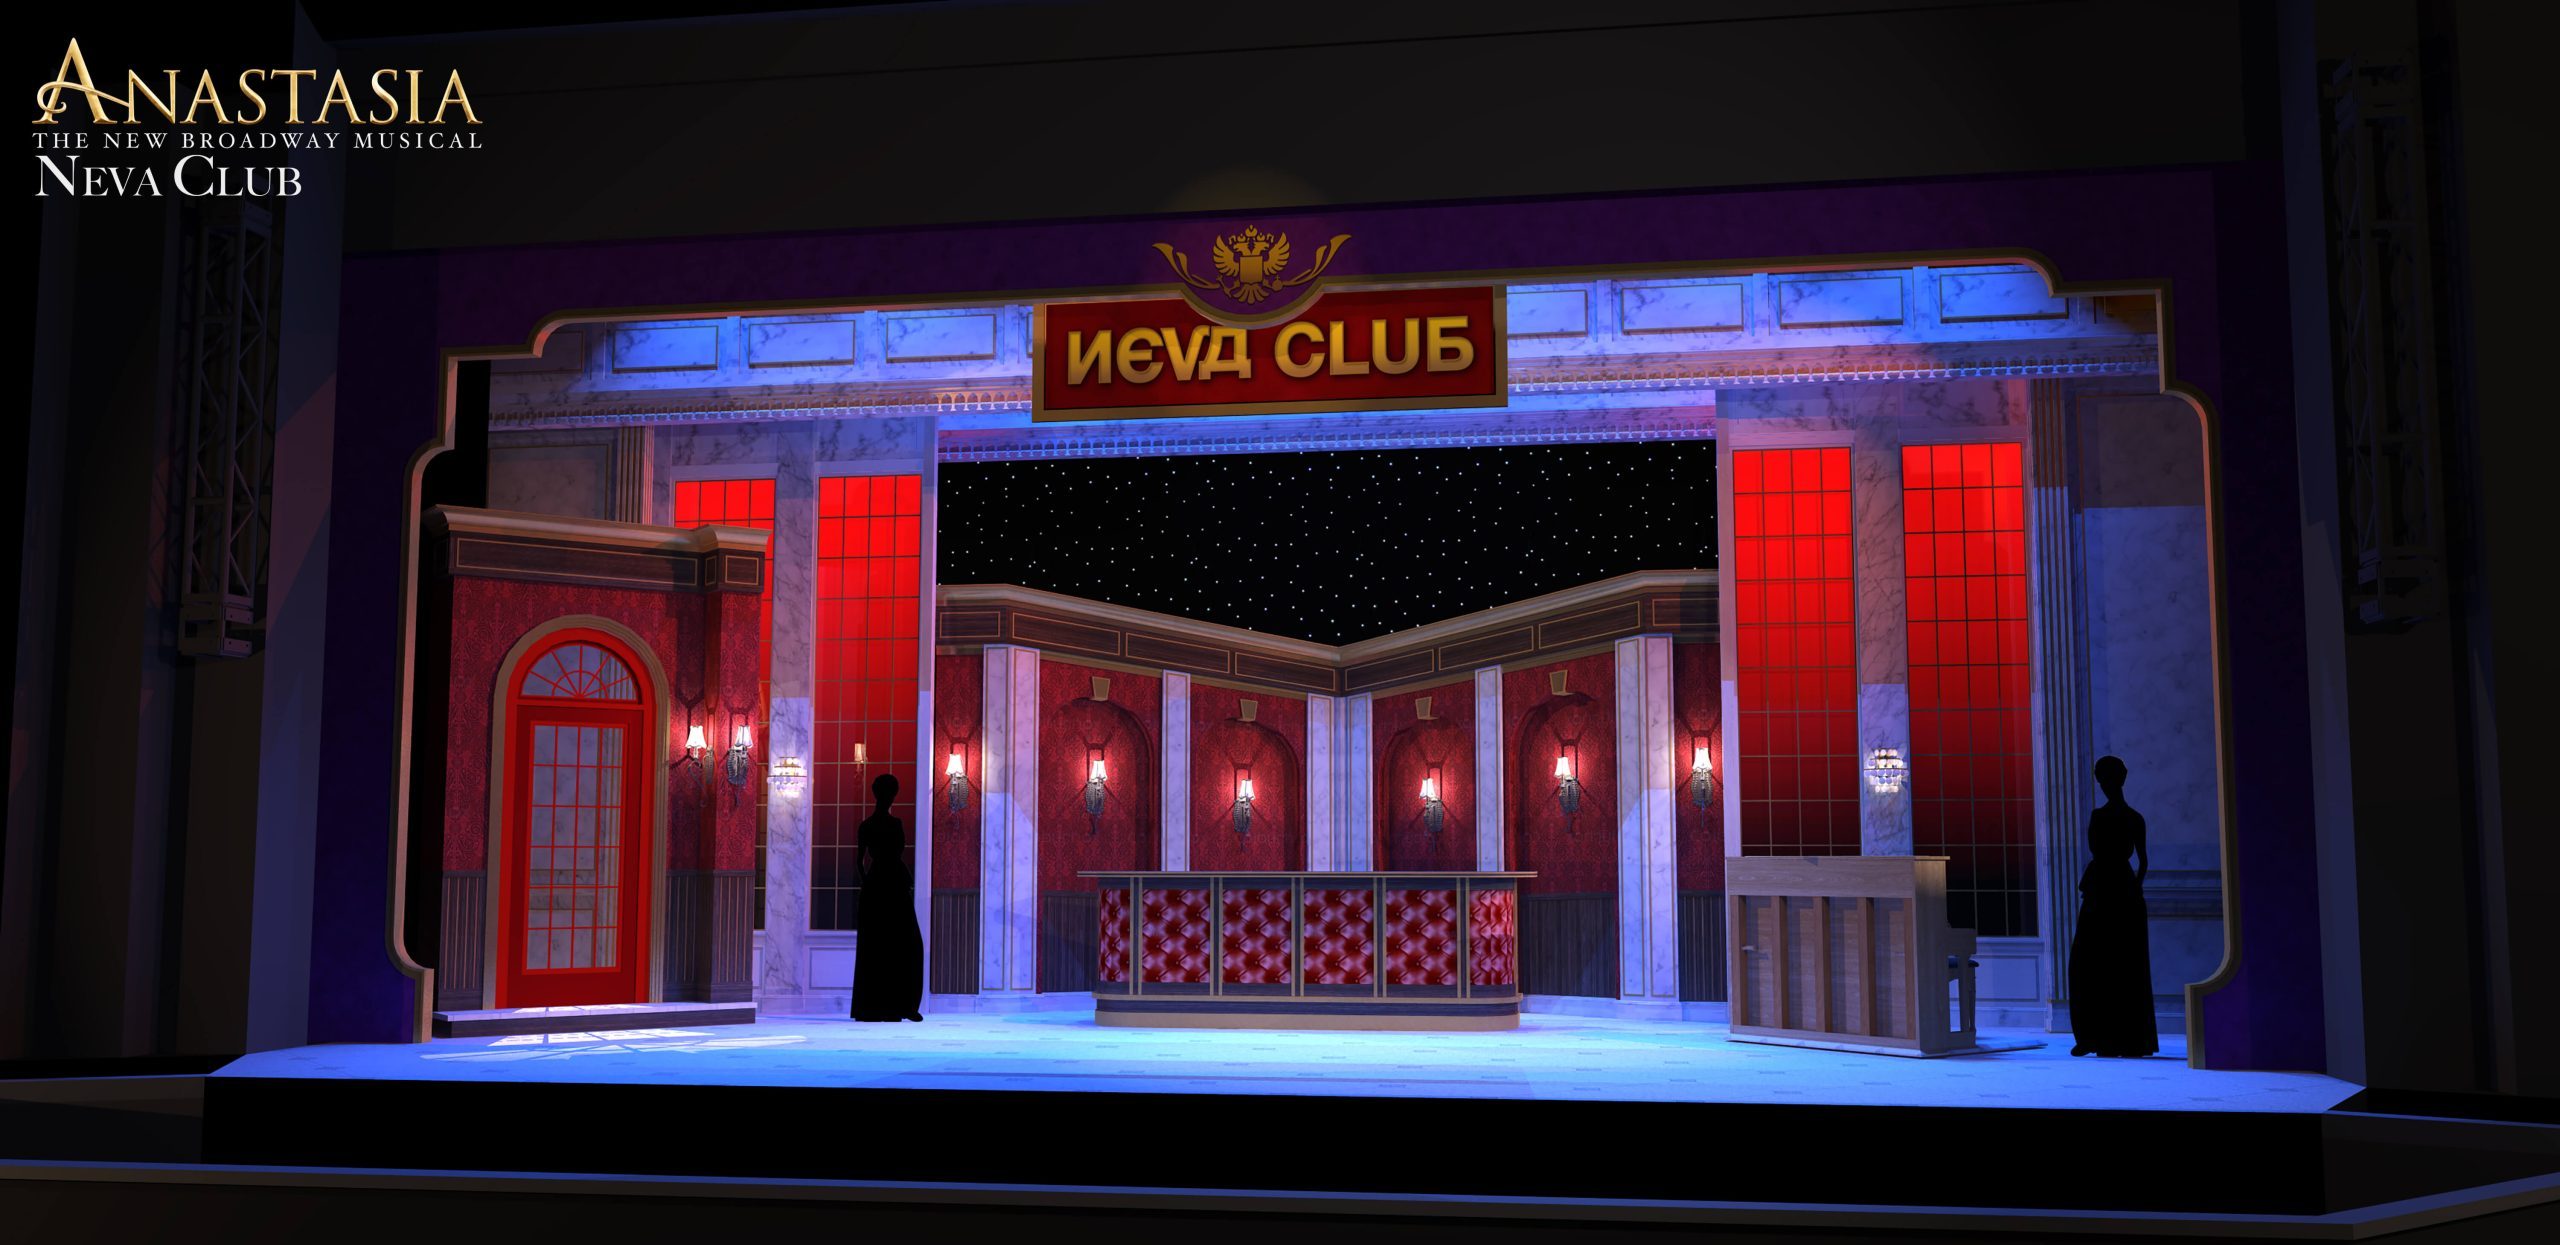 Anastasia scenery rental - Neva Club Interior musical scene - Front Row Theatrical Rental